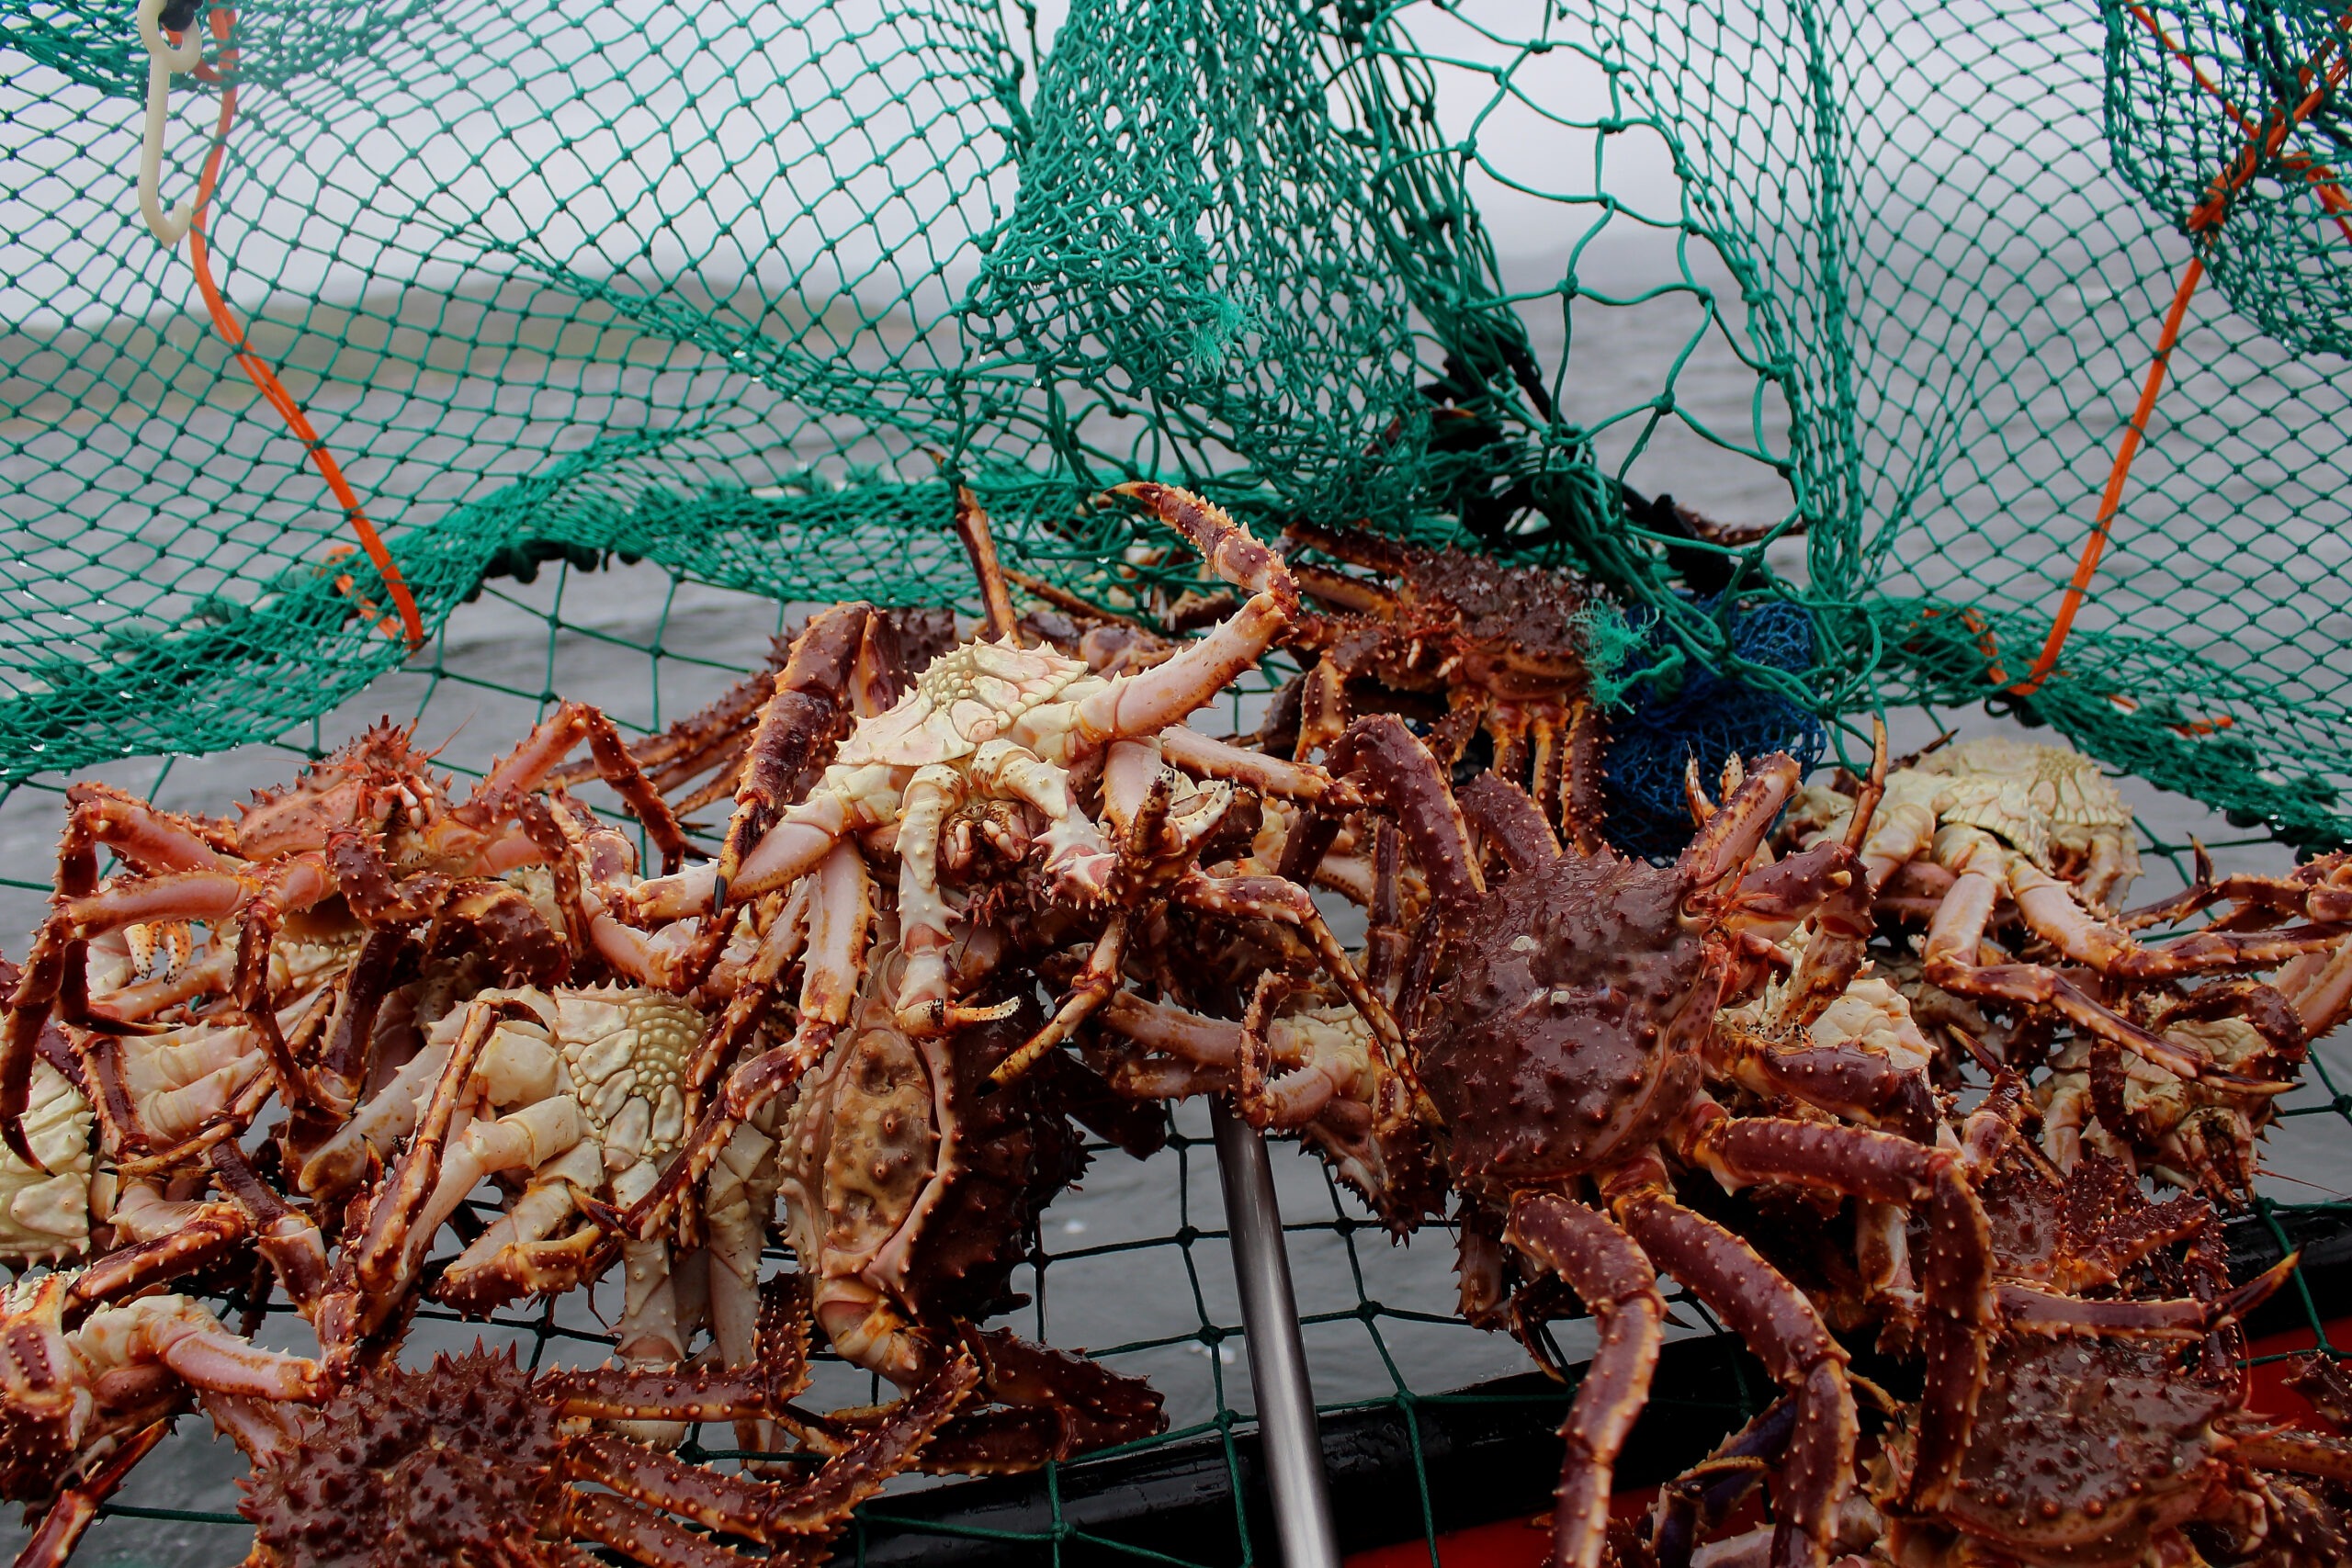 Fishing net full of king crabs. | Source: Shutterstock